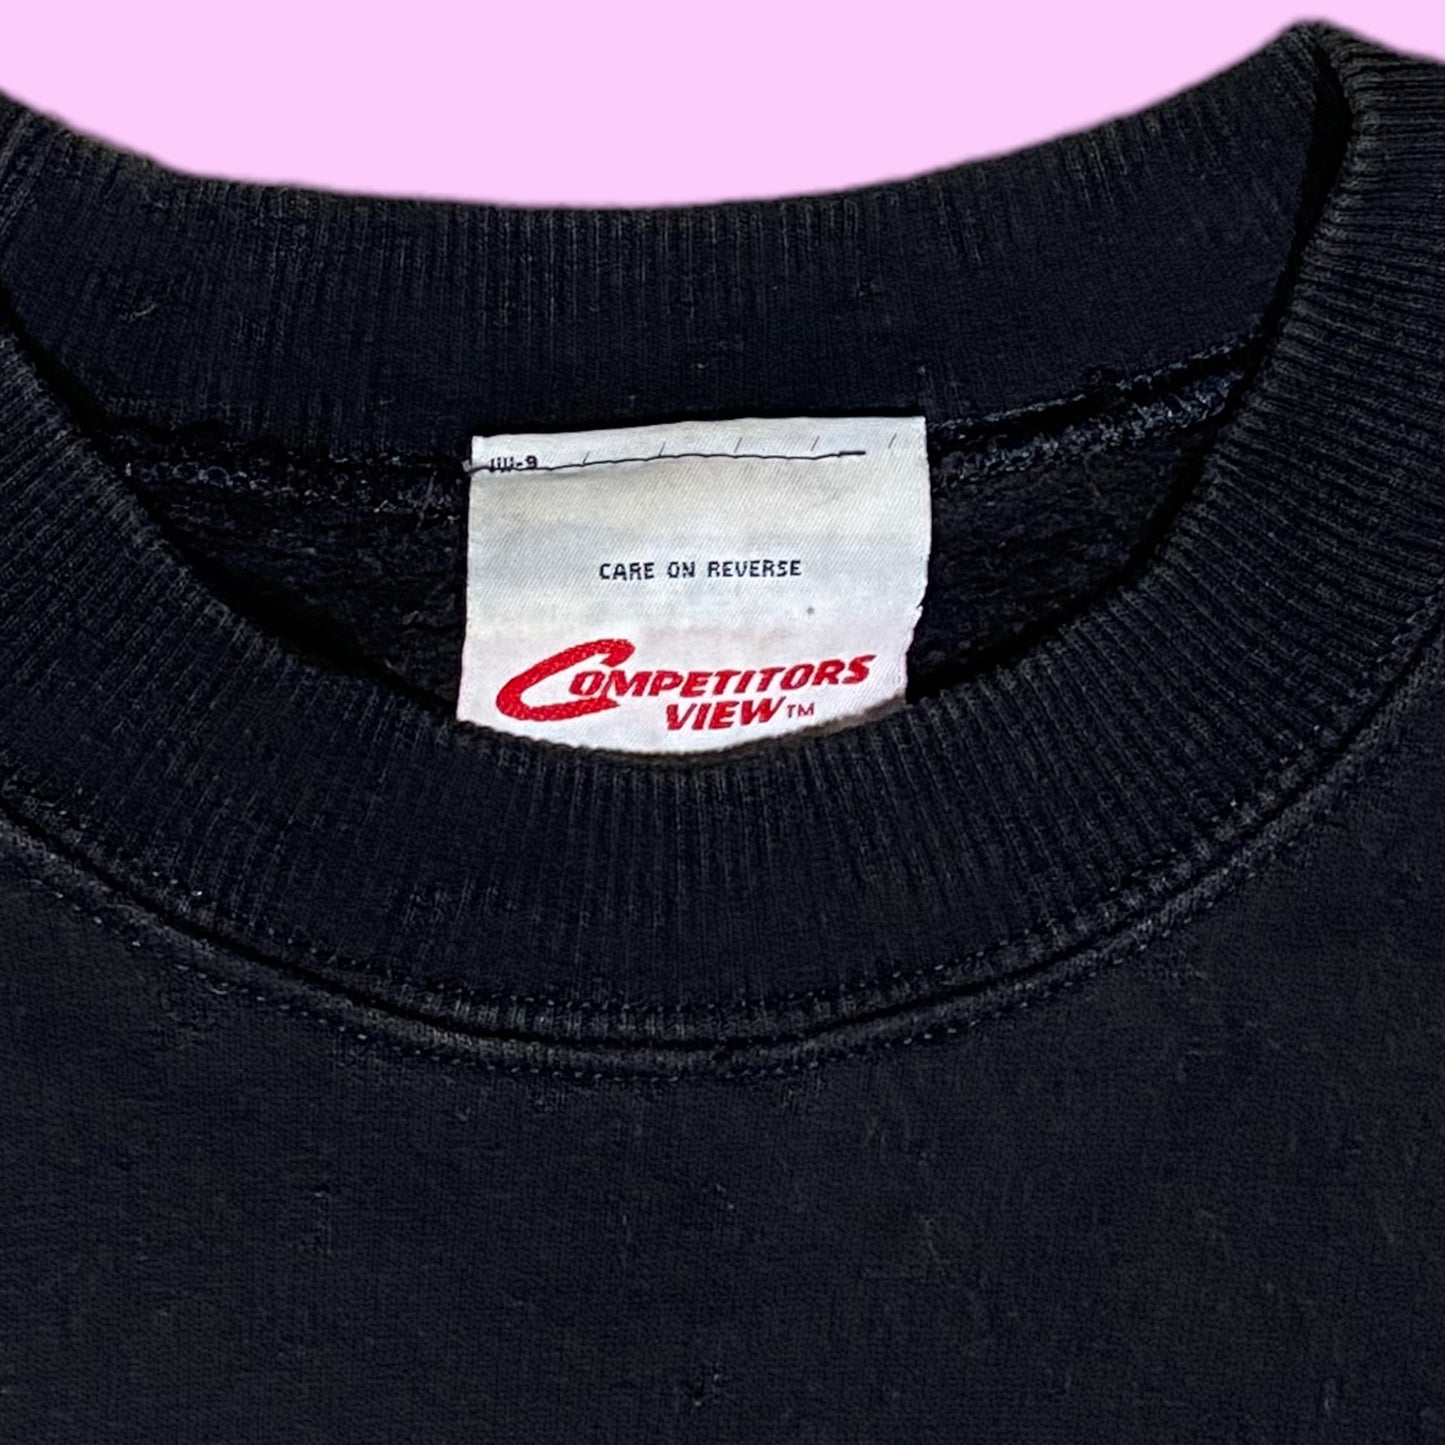 Vintage Tony Stewart Nascar sweater - L